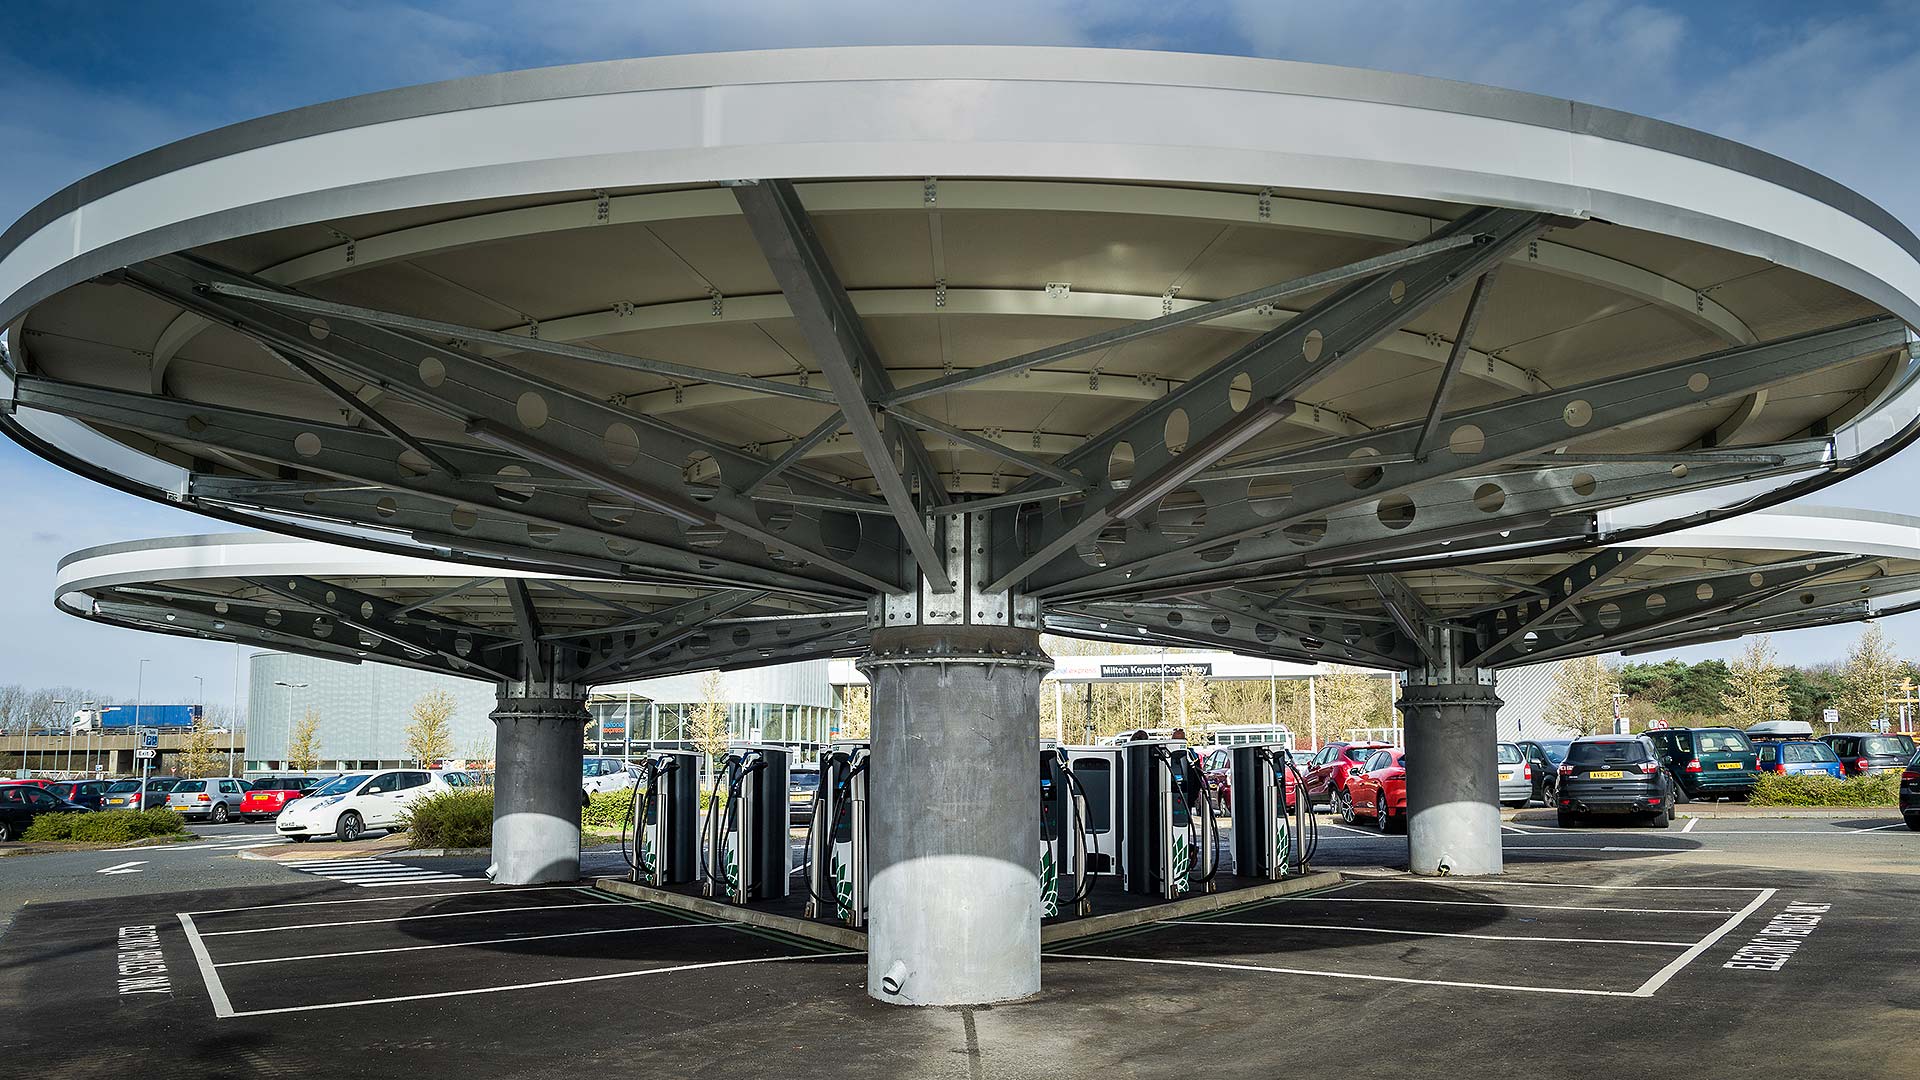 BP Chargemaster rapid charging hub at Milton Keynes Coachway